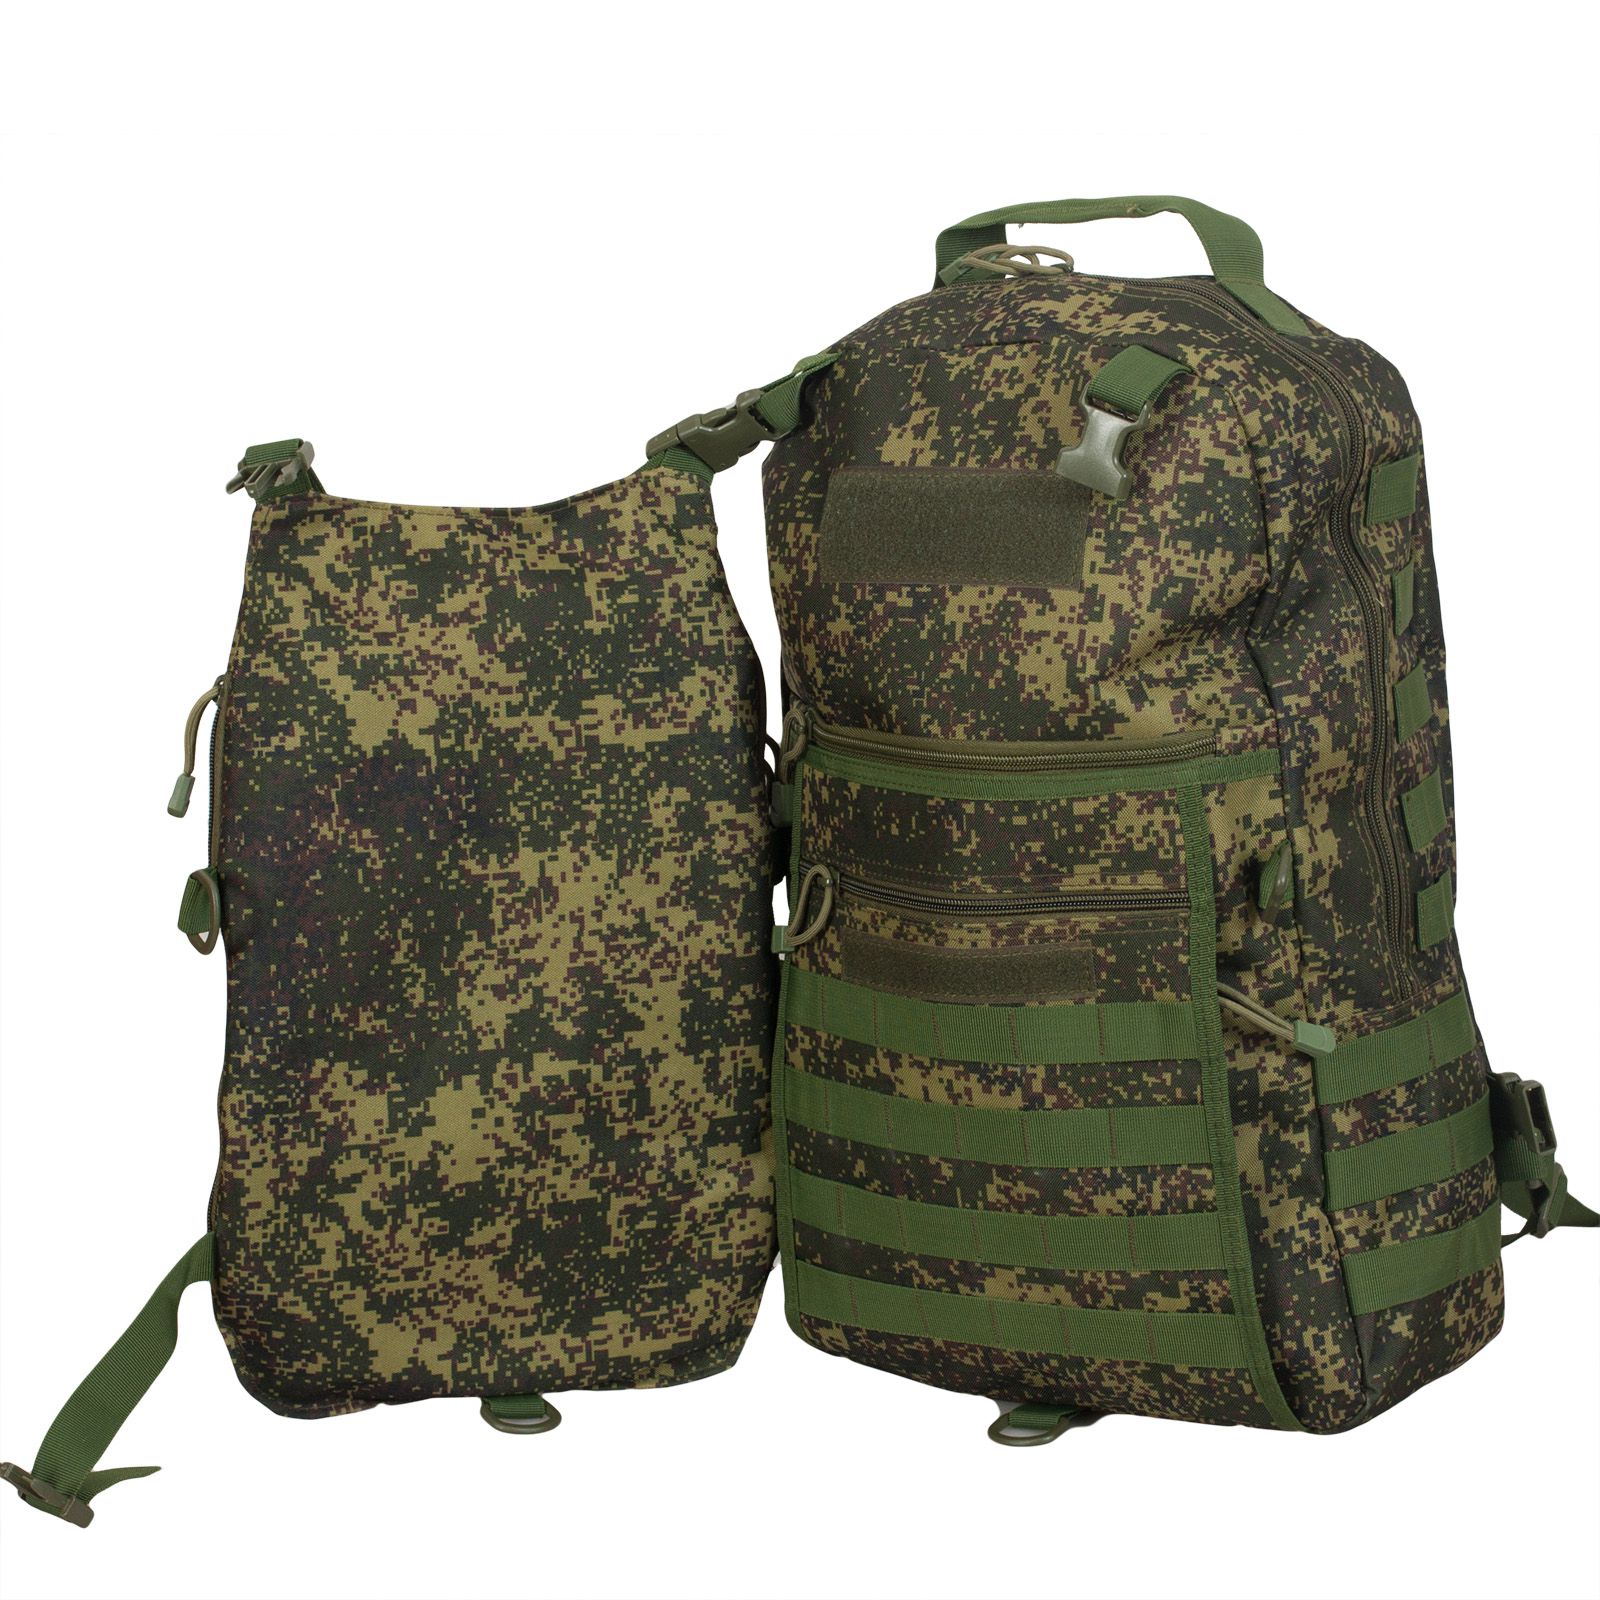 Преимущества и особенности военного рюкзака